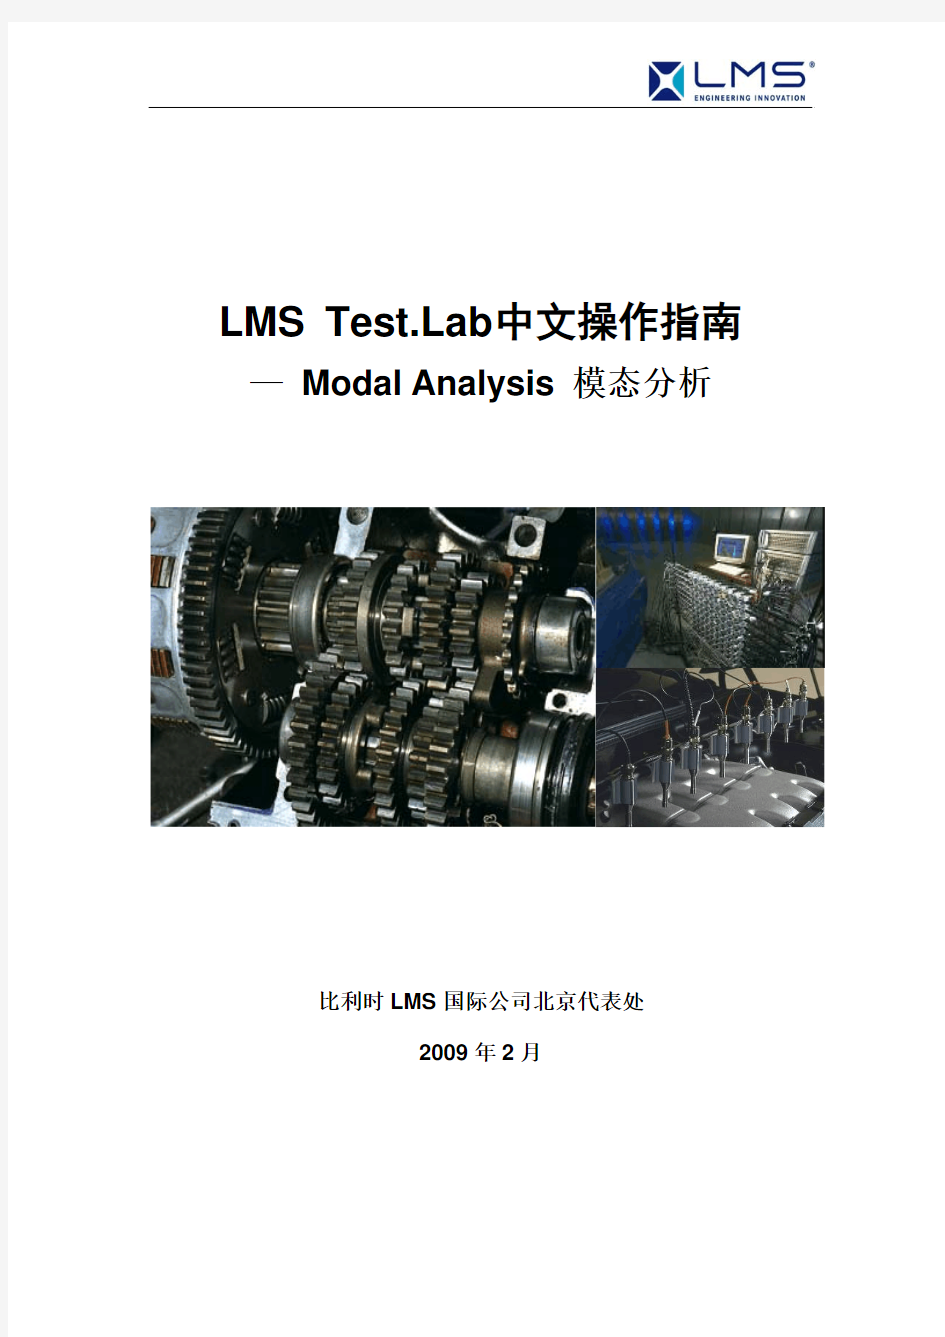 LMS Test.Lab中文操作指南_Modal Analysis模态分析